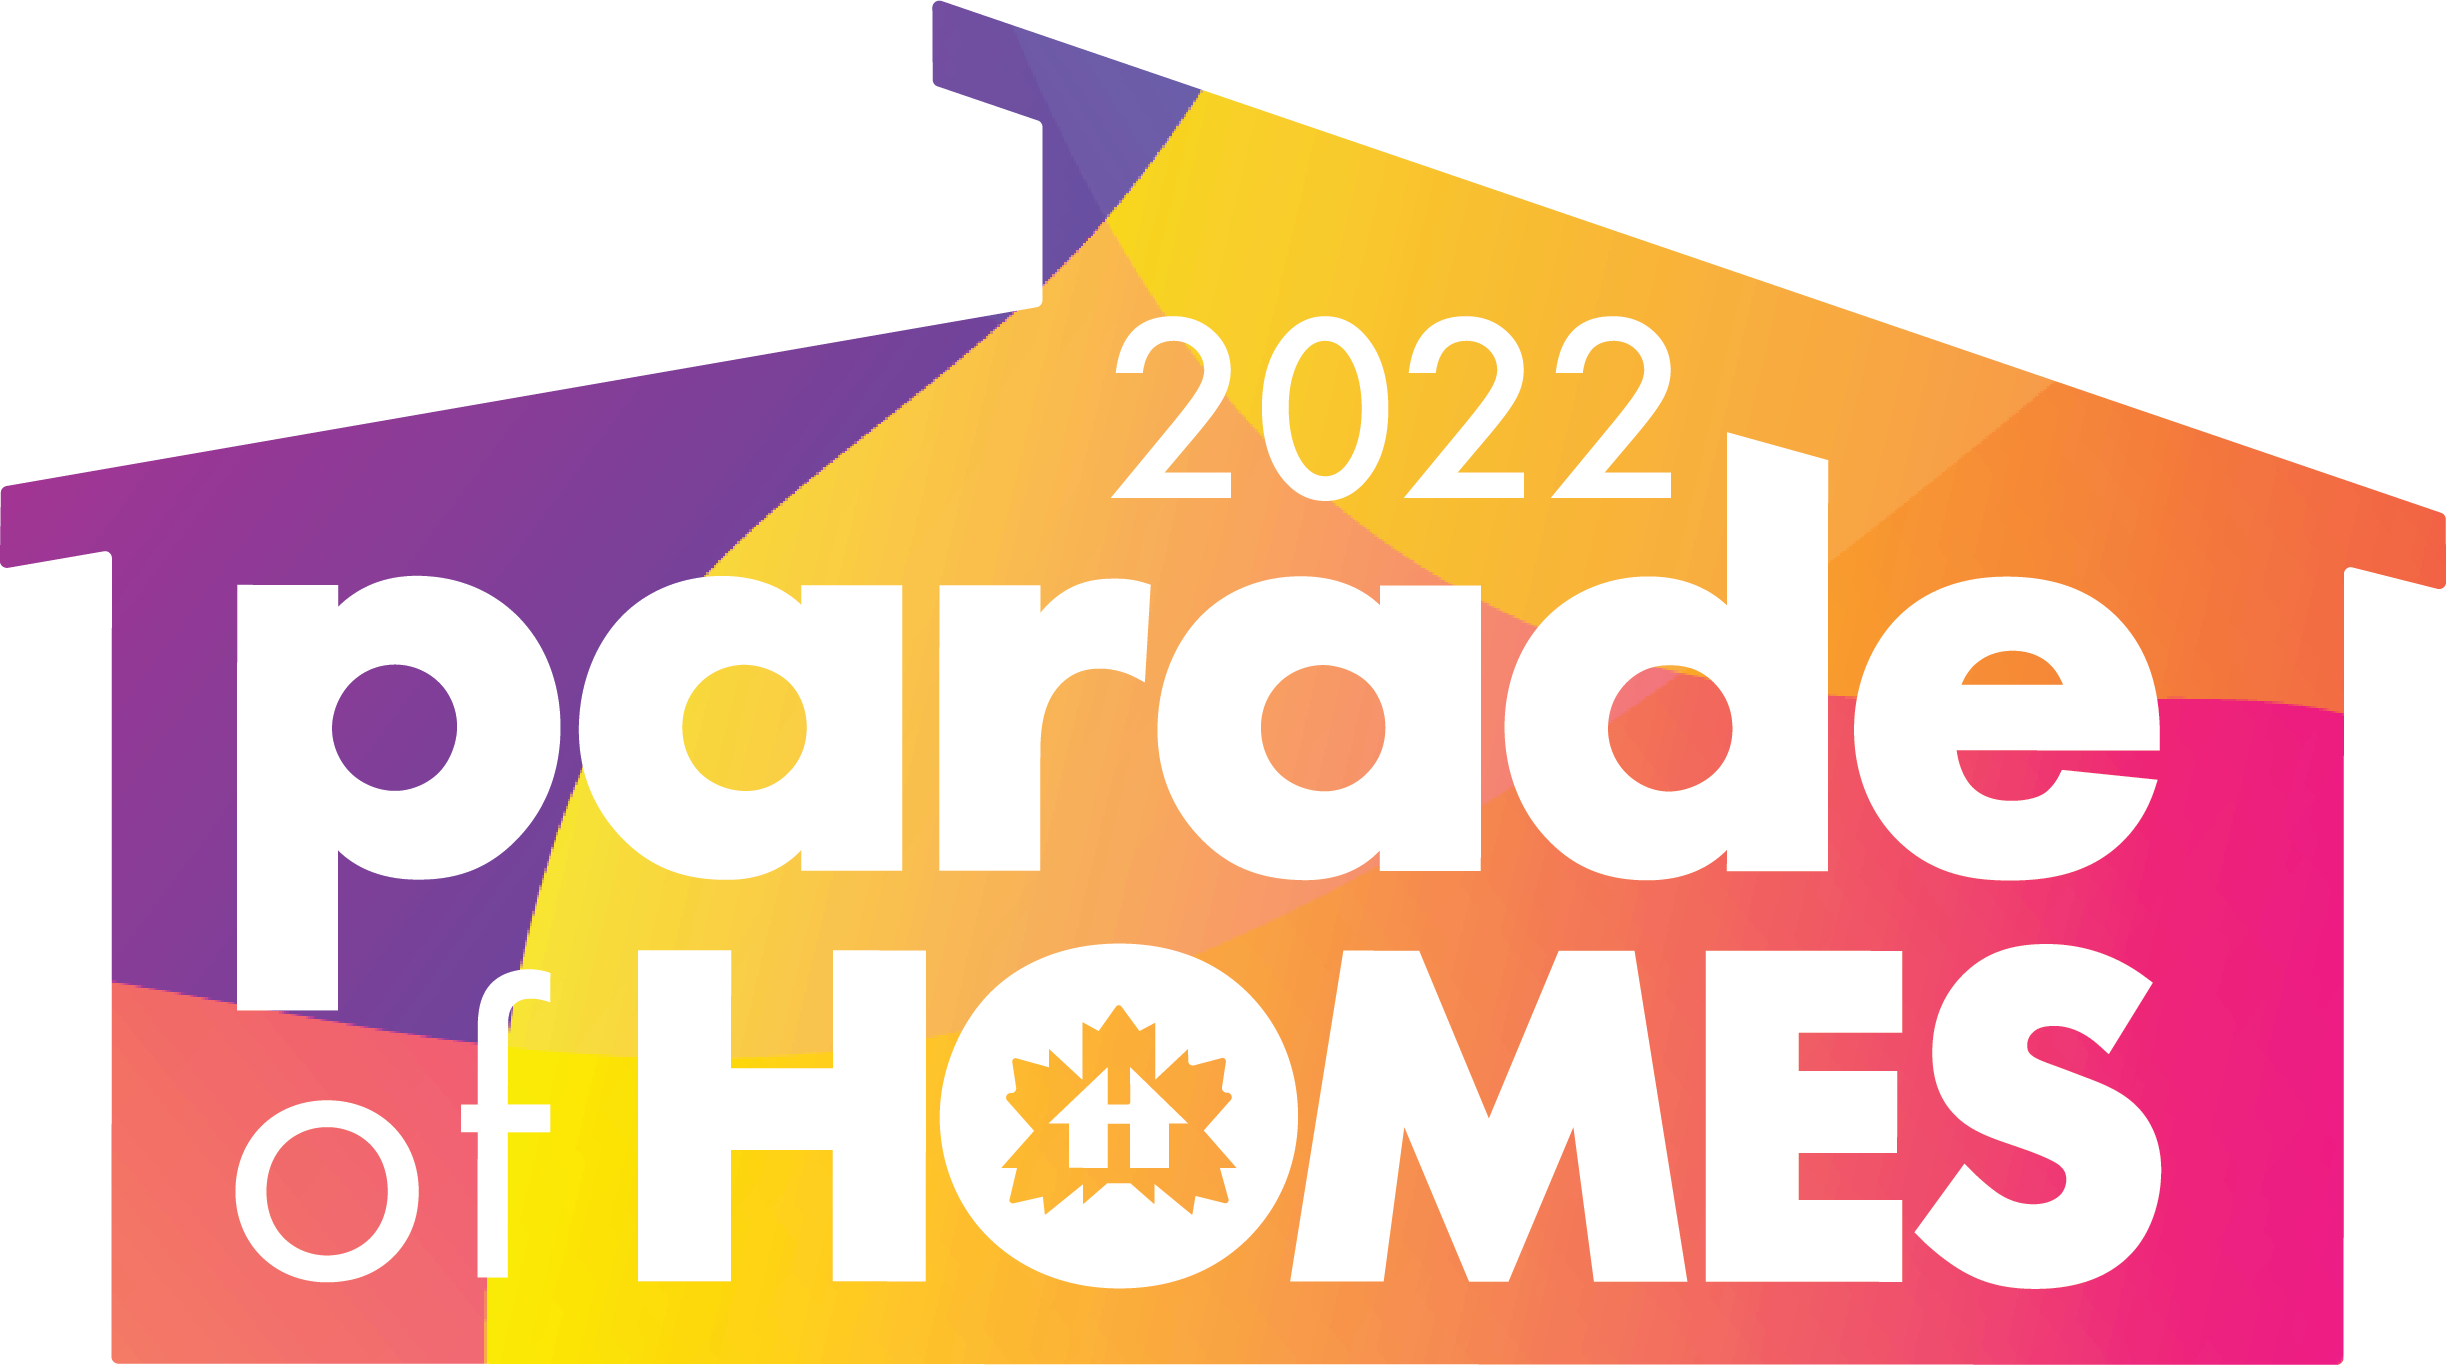 Parade of Homes 2022